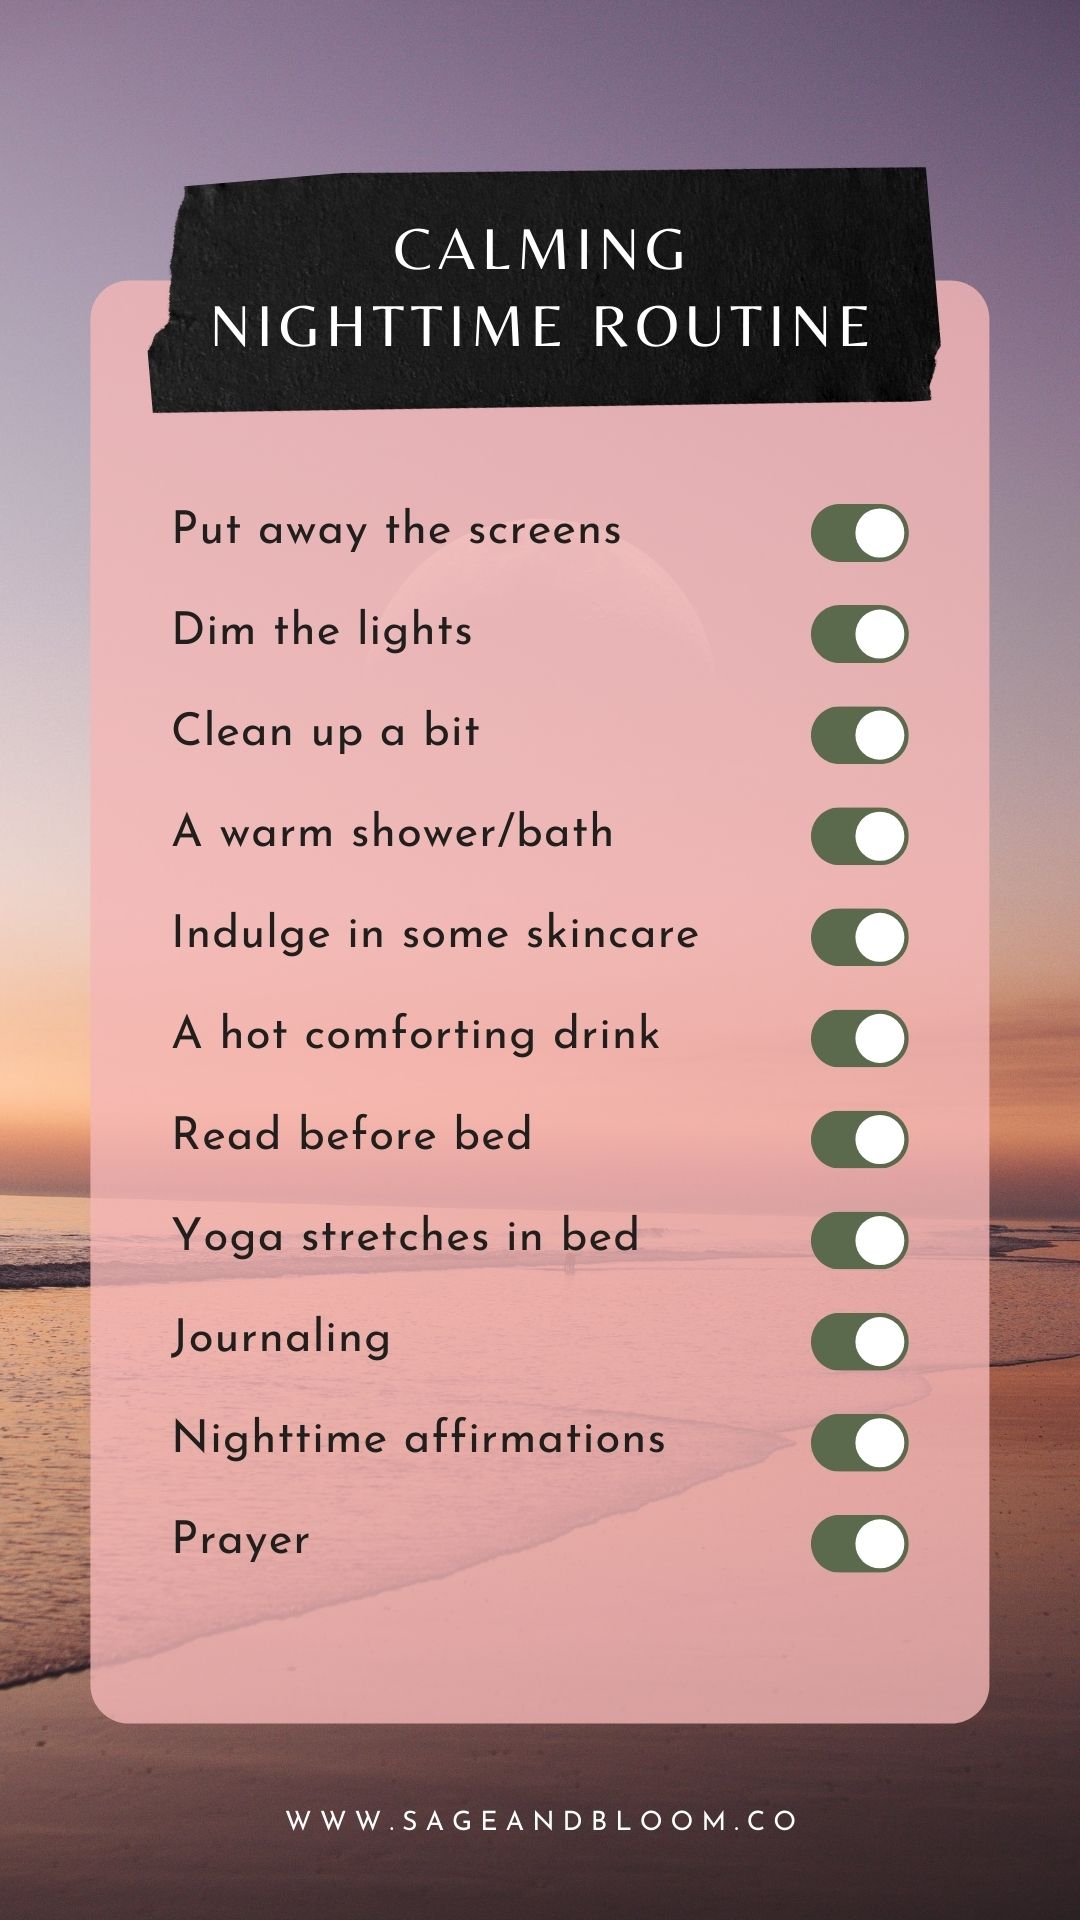 Calming nighttime routines checklist